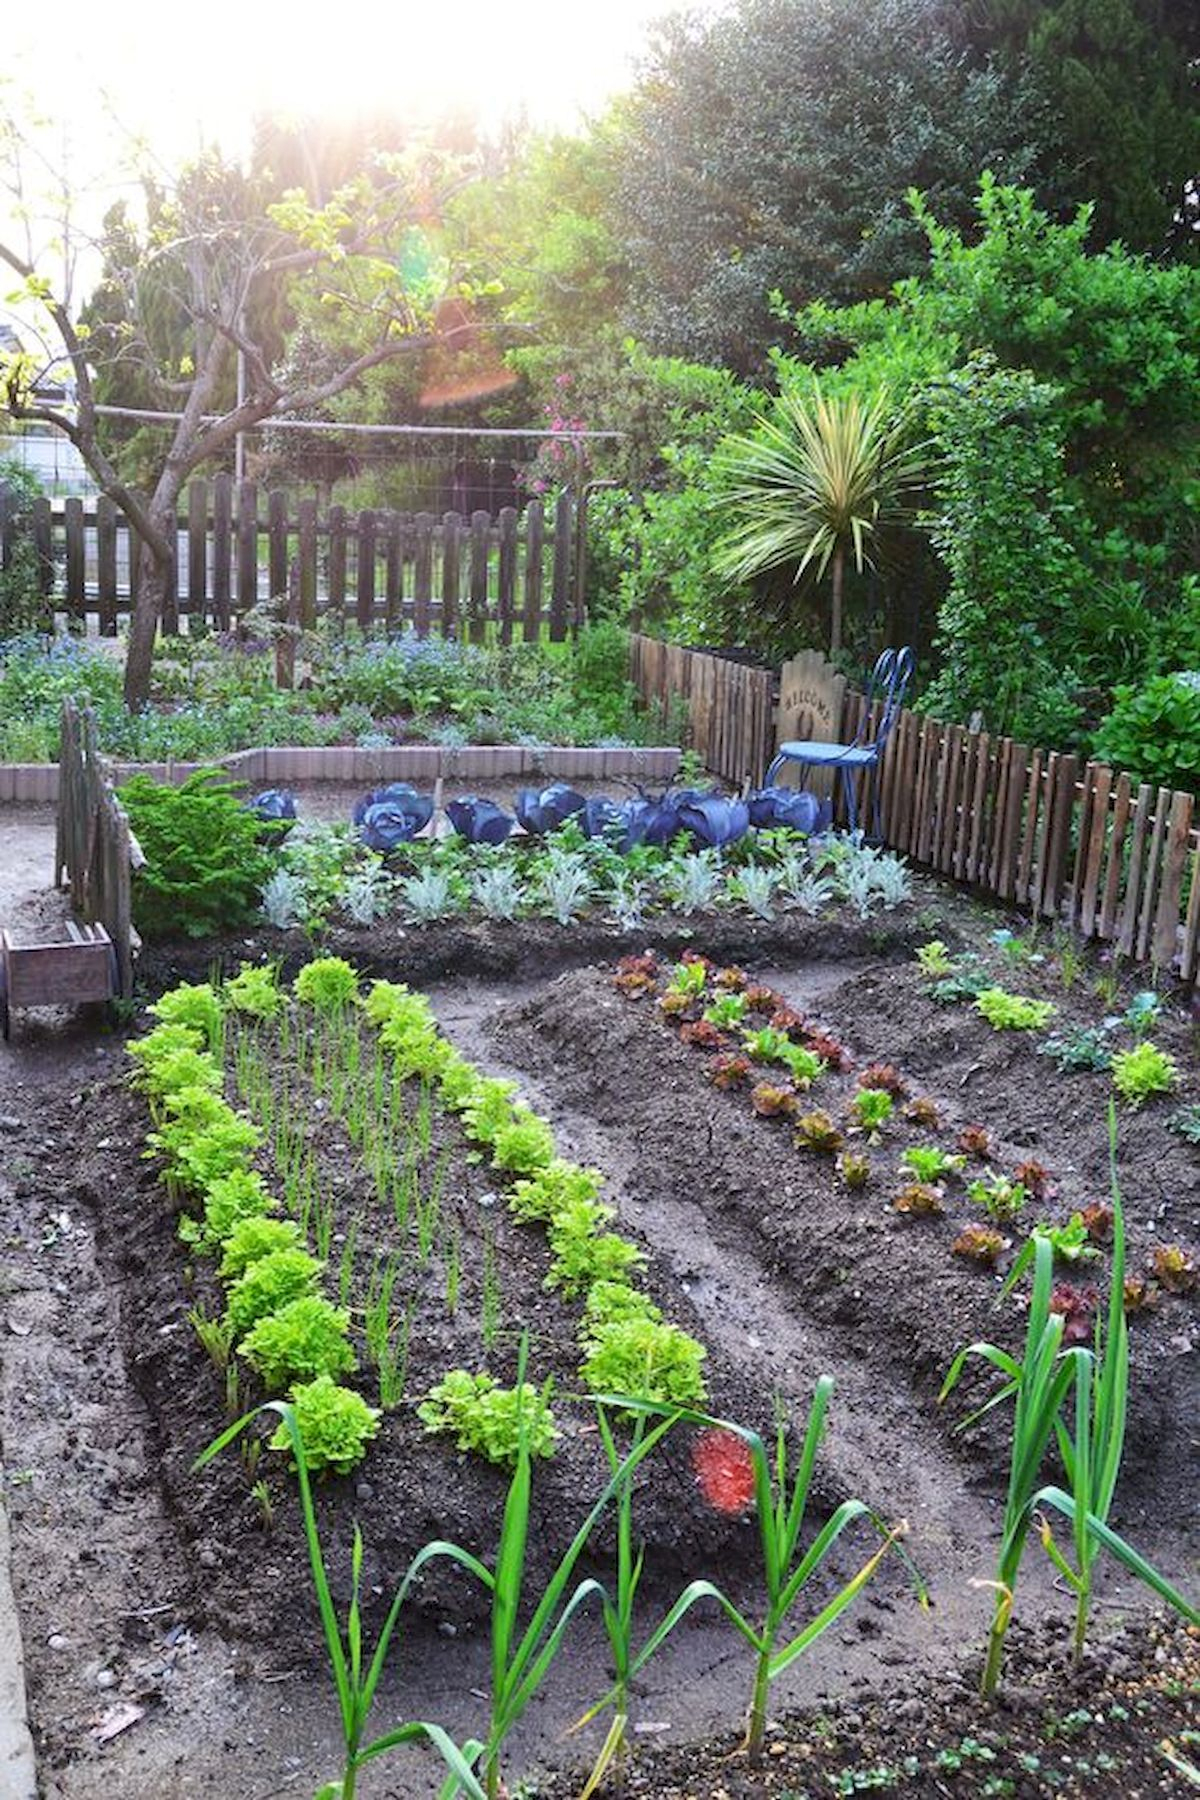  large vegetable garden design ideas